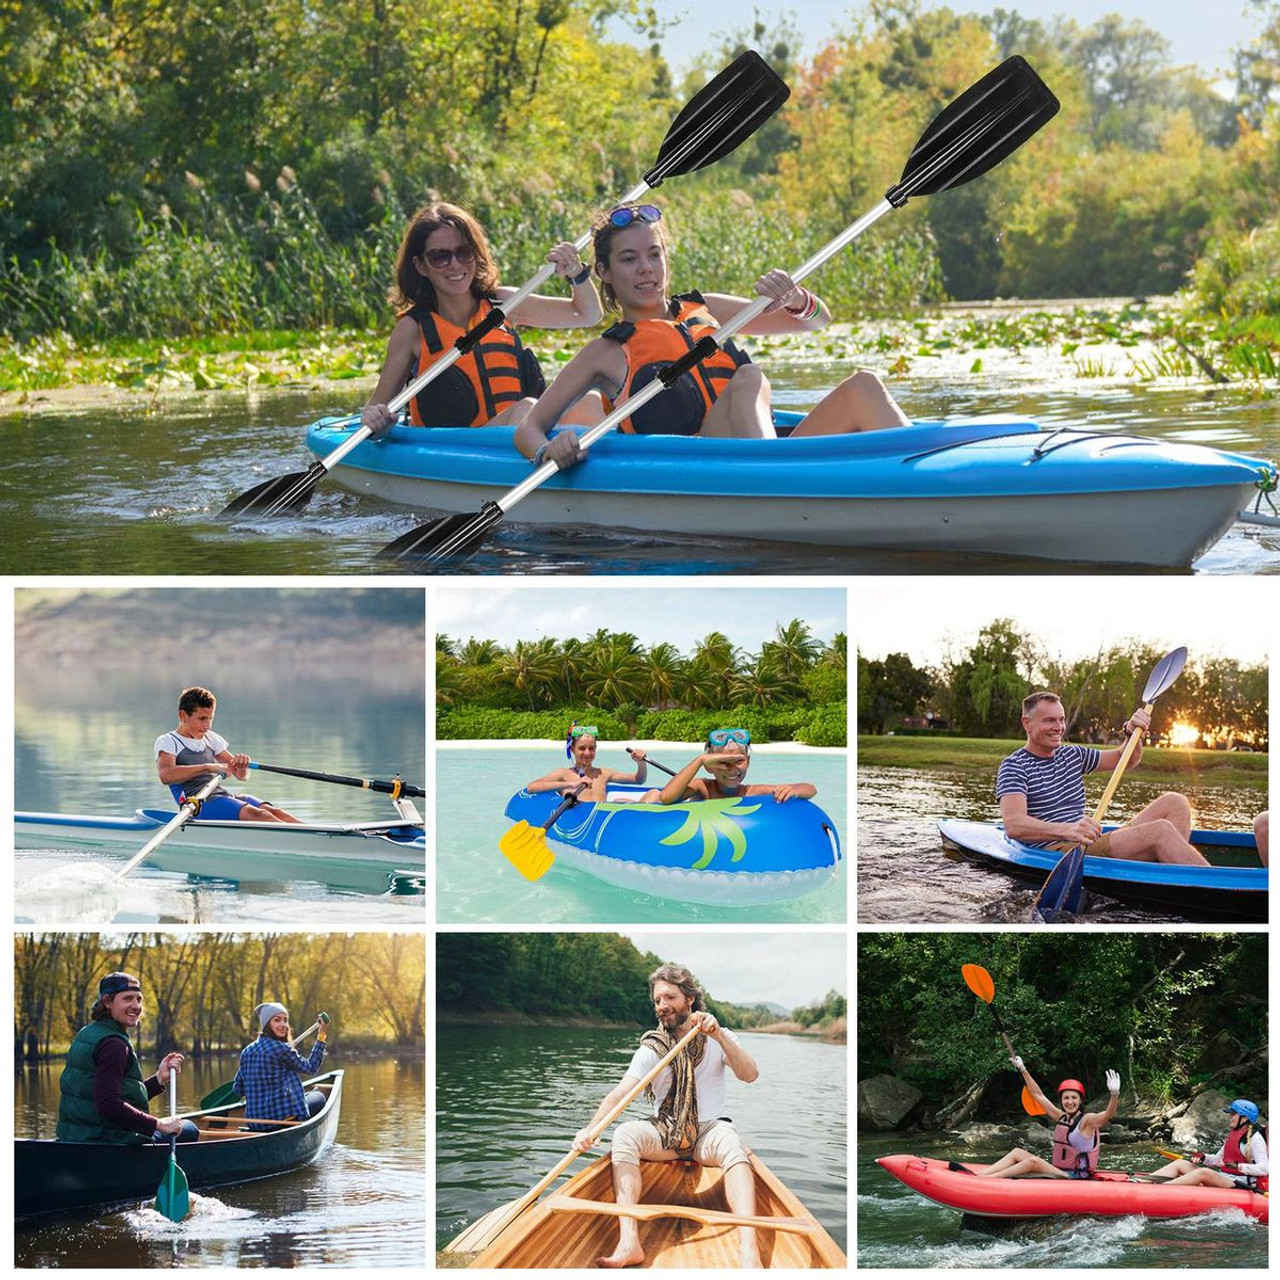 LakeForest Two Kayak Paddles product image